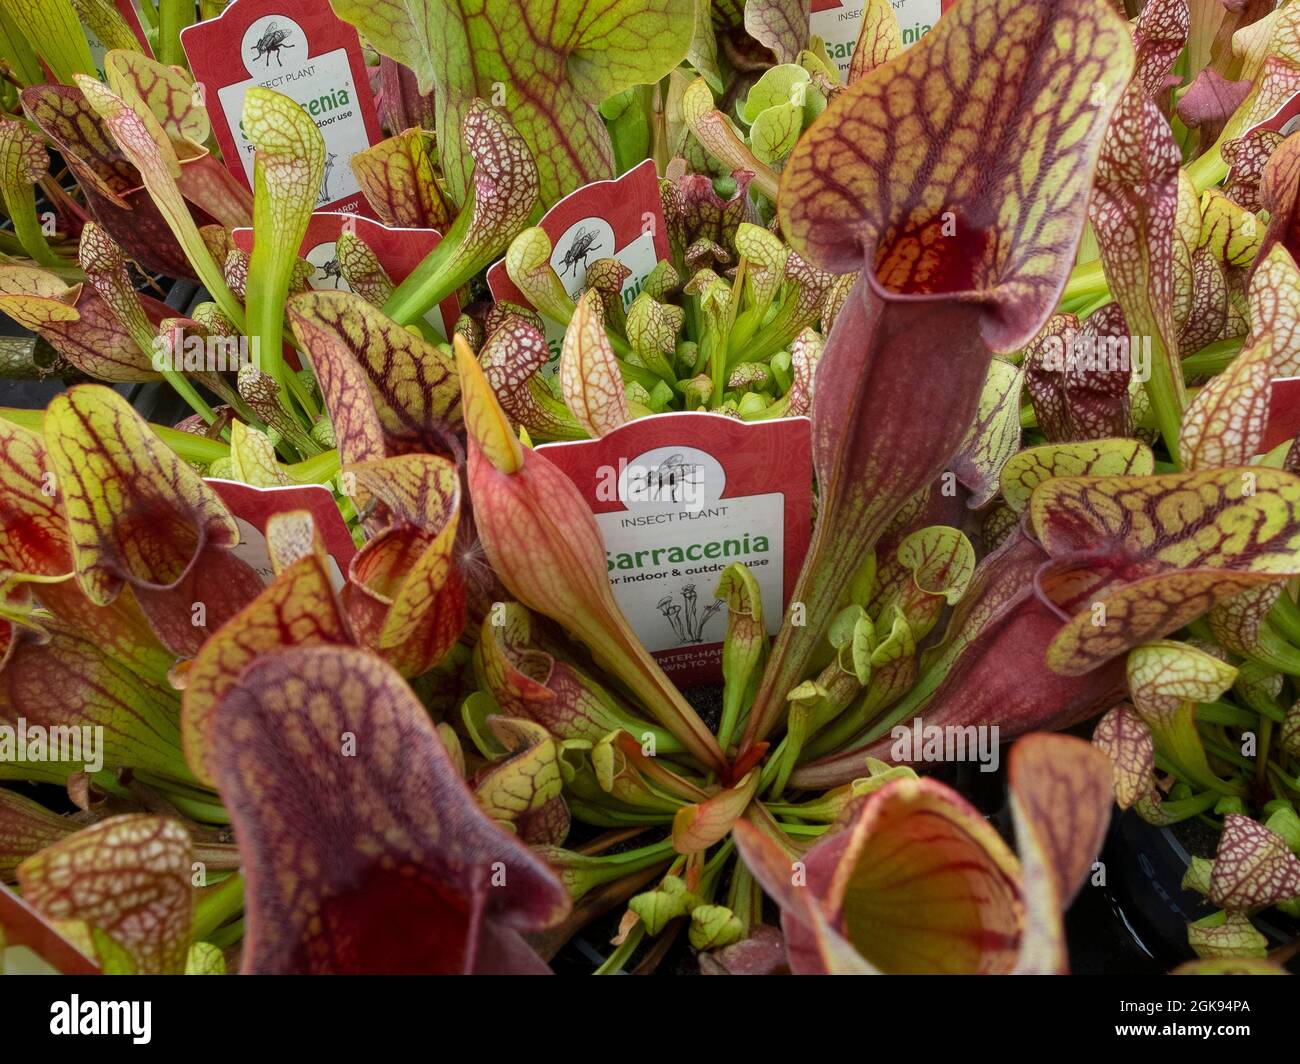 pitcher plant (Sarracenia spec), carnivorous plants to sell, Germany Stock Photo